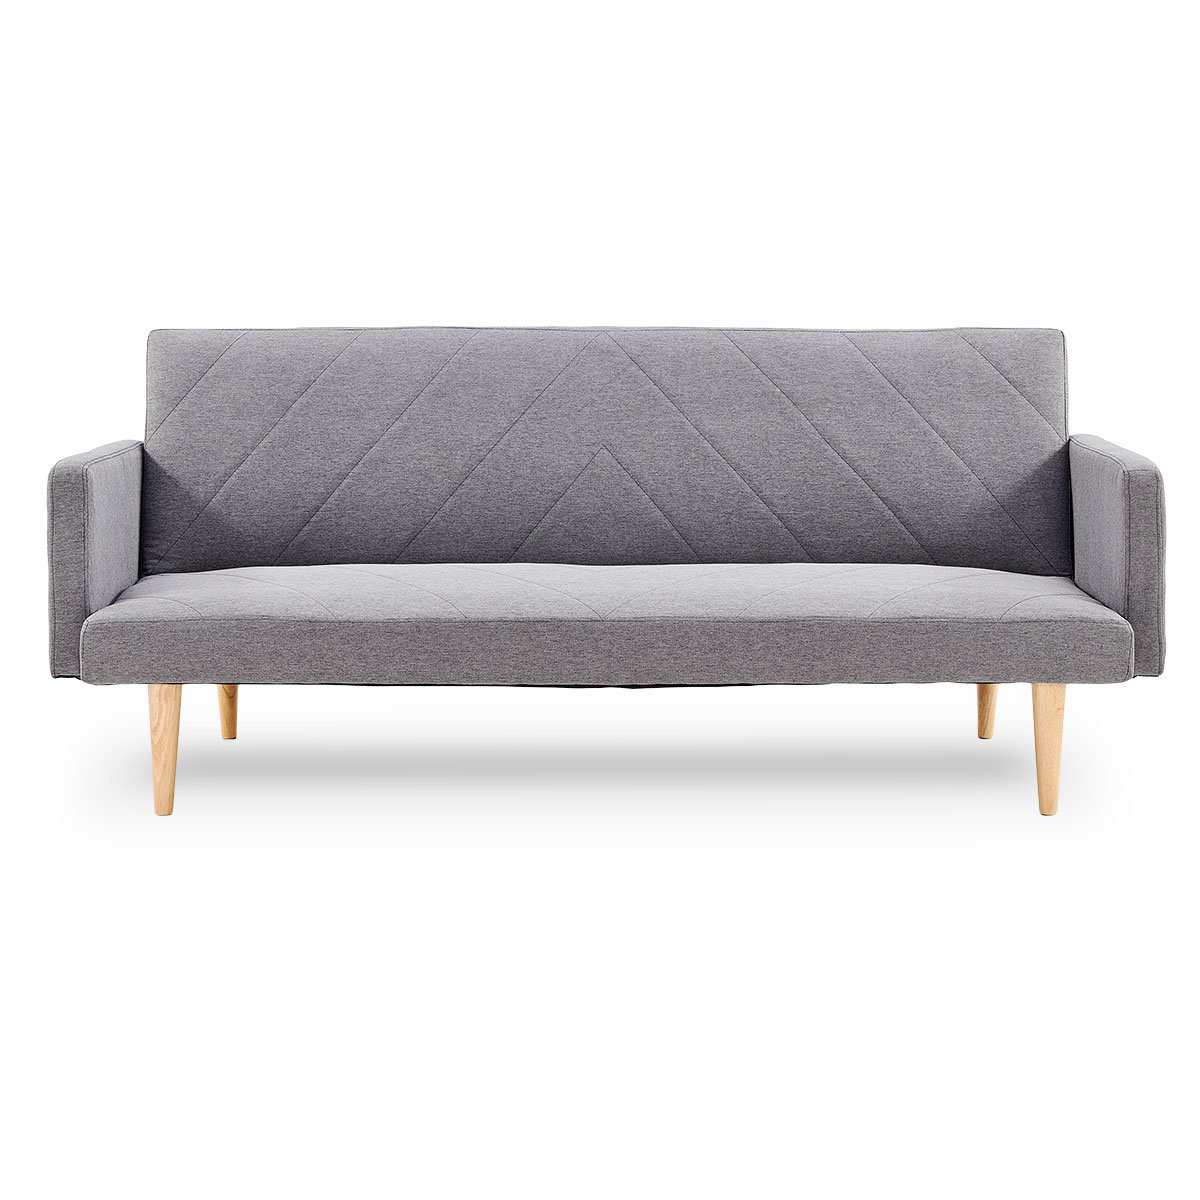 Sarantino 3 Seater Modular Linen Fabric Sofa Bed Couch Light Grey 2